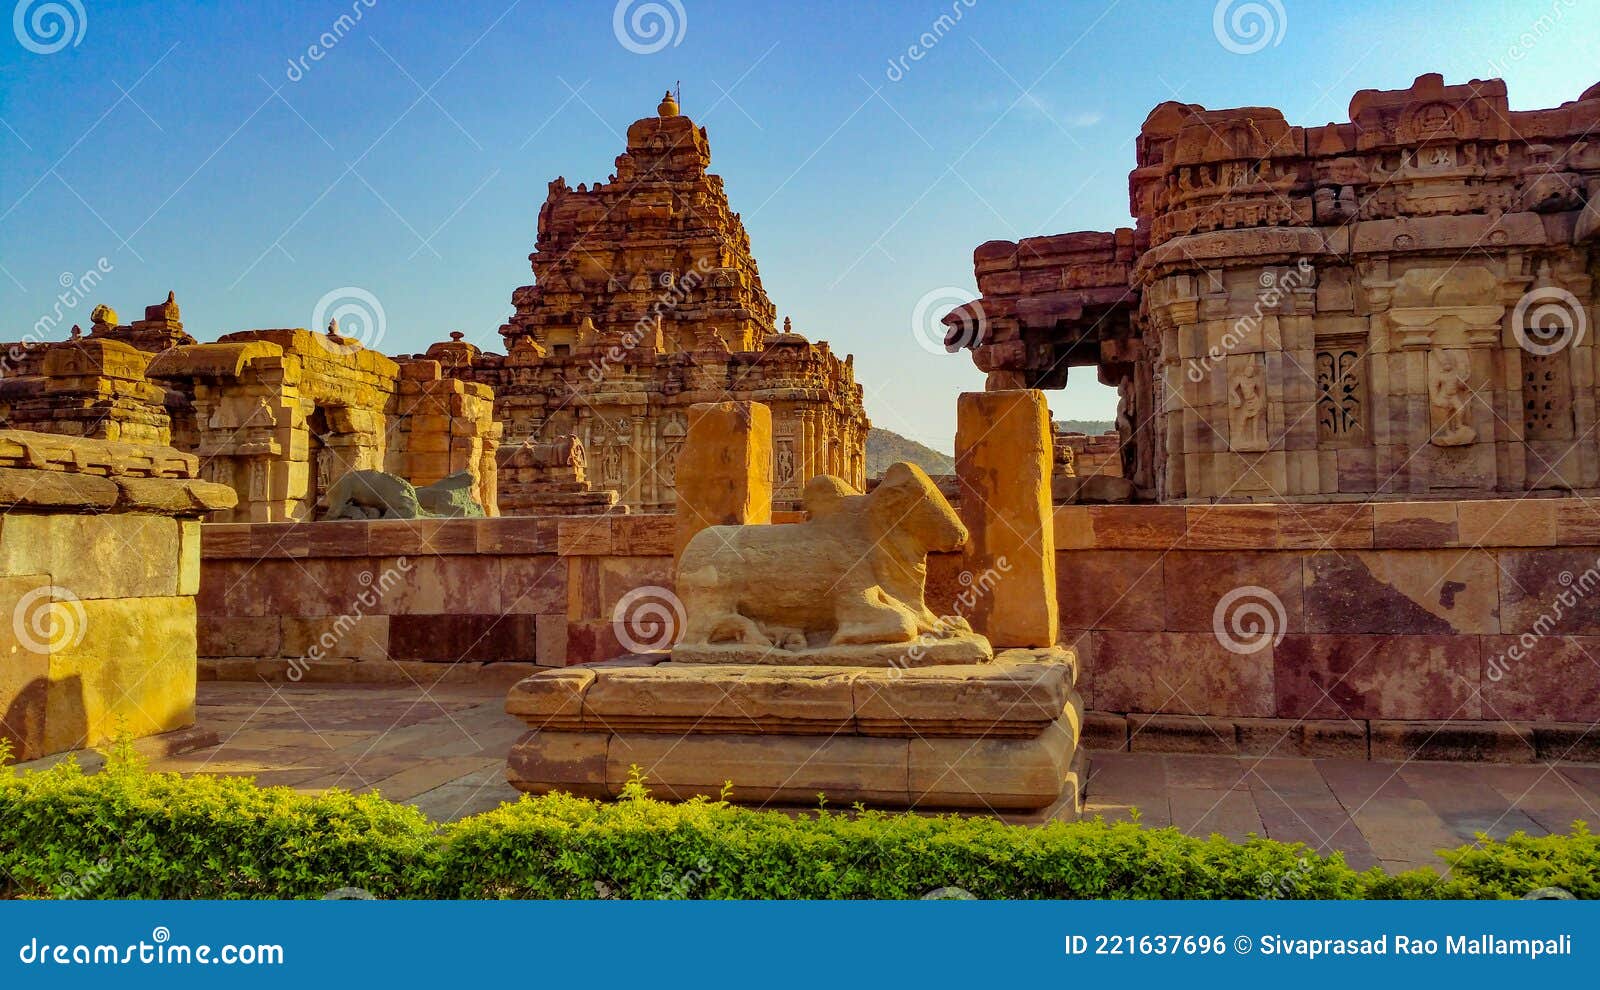 group of monuments at pattadakal,   cultural unesco world heritage site ,  karnataka,  india